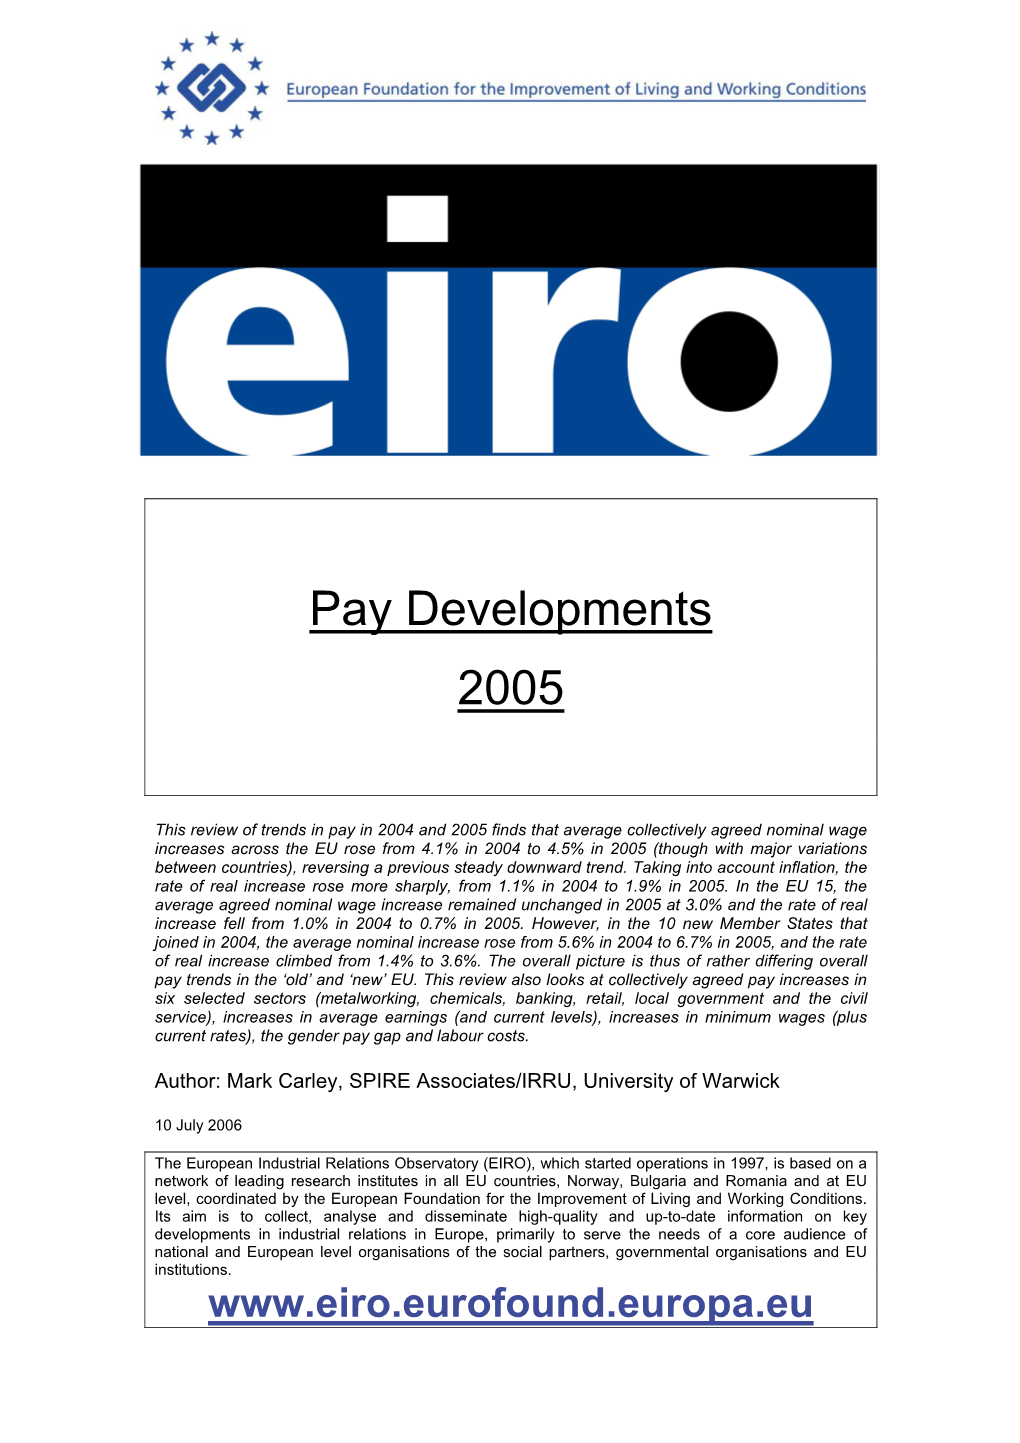 Pay Developments 2005